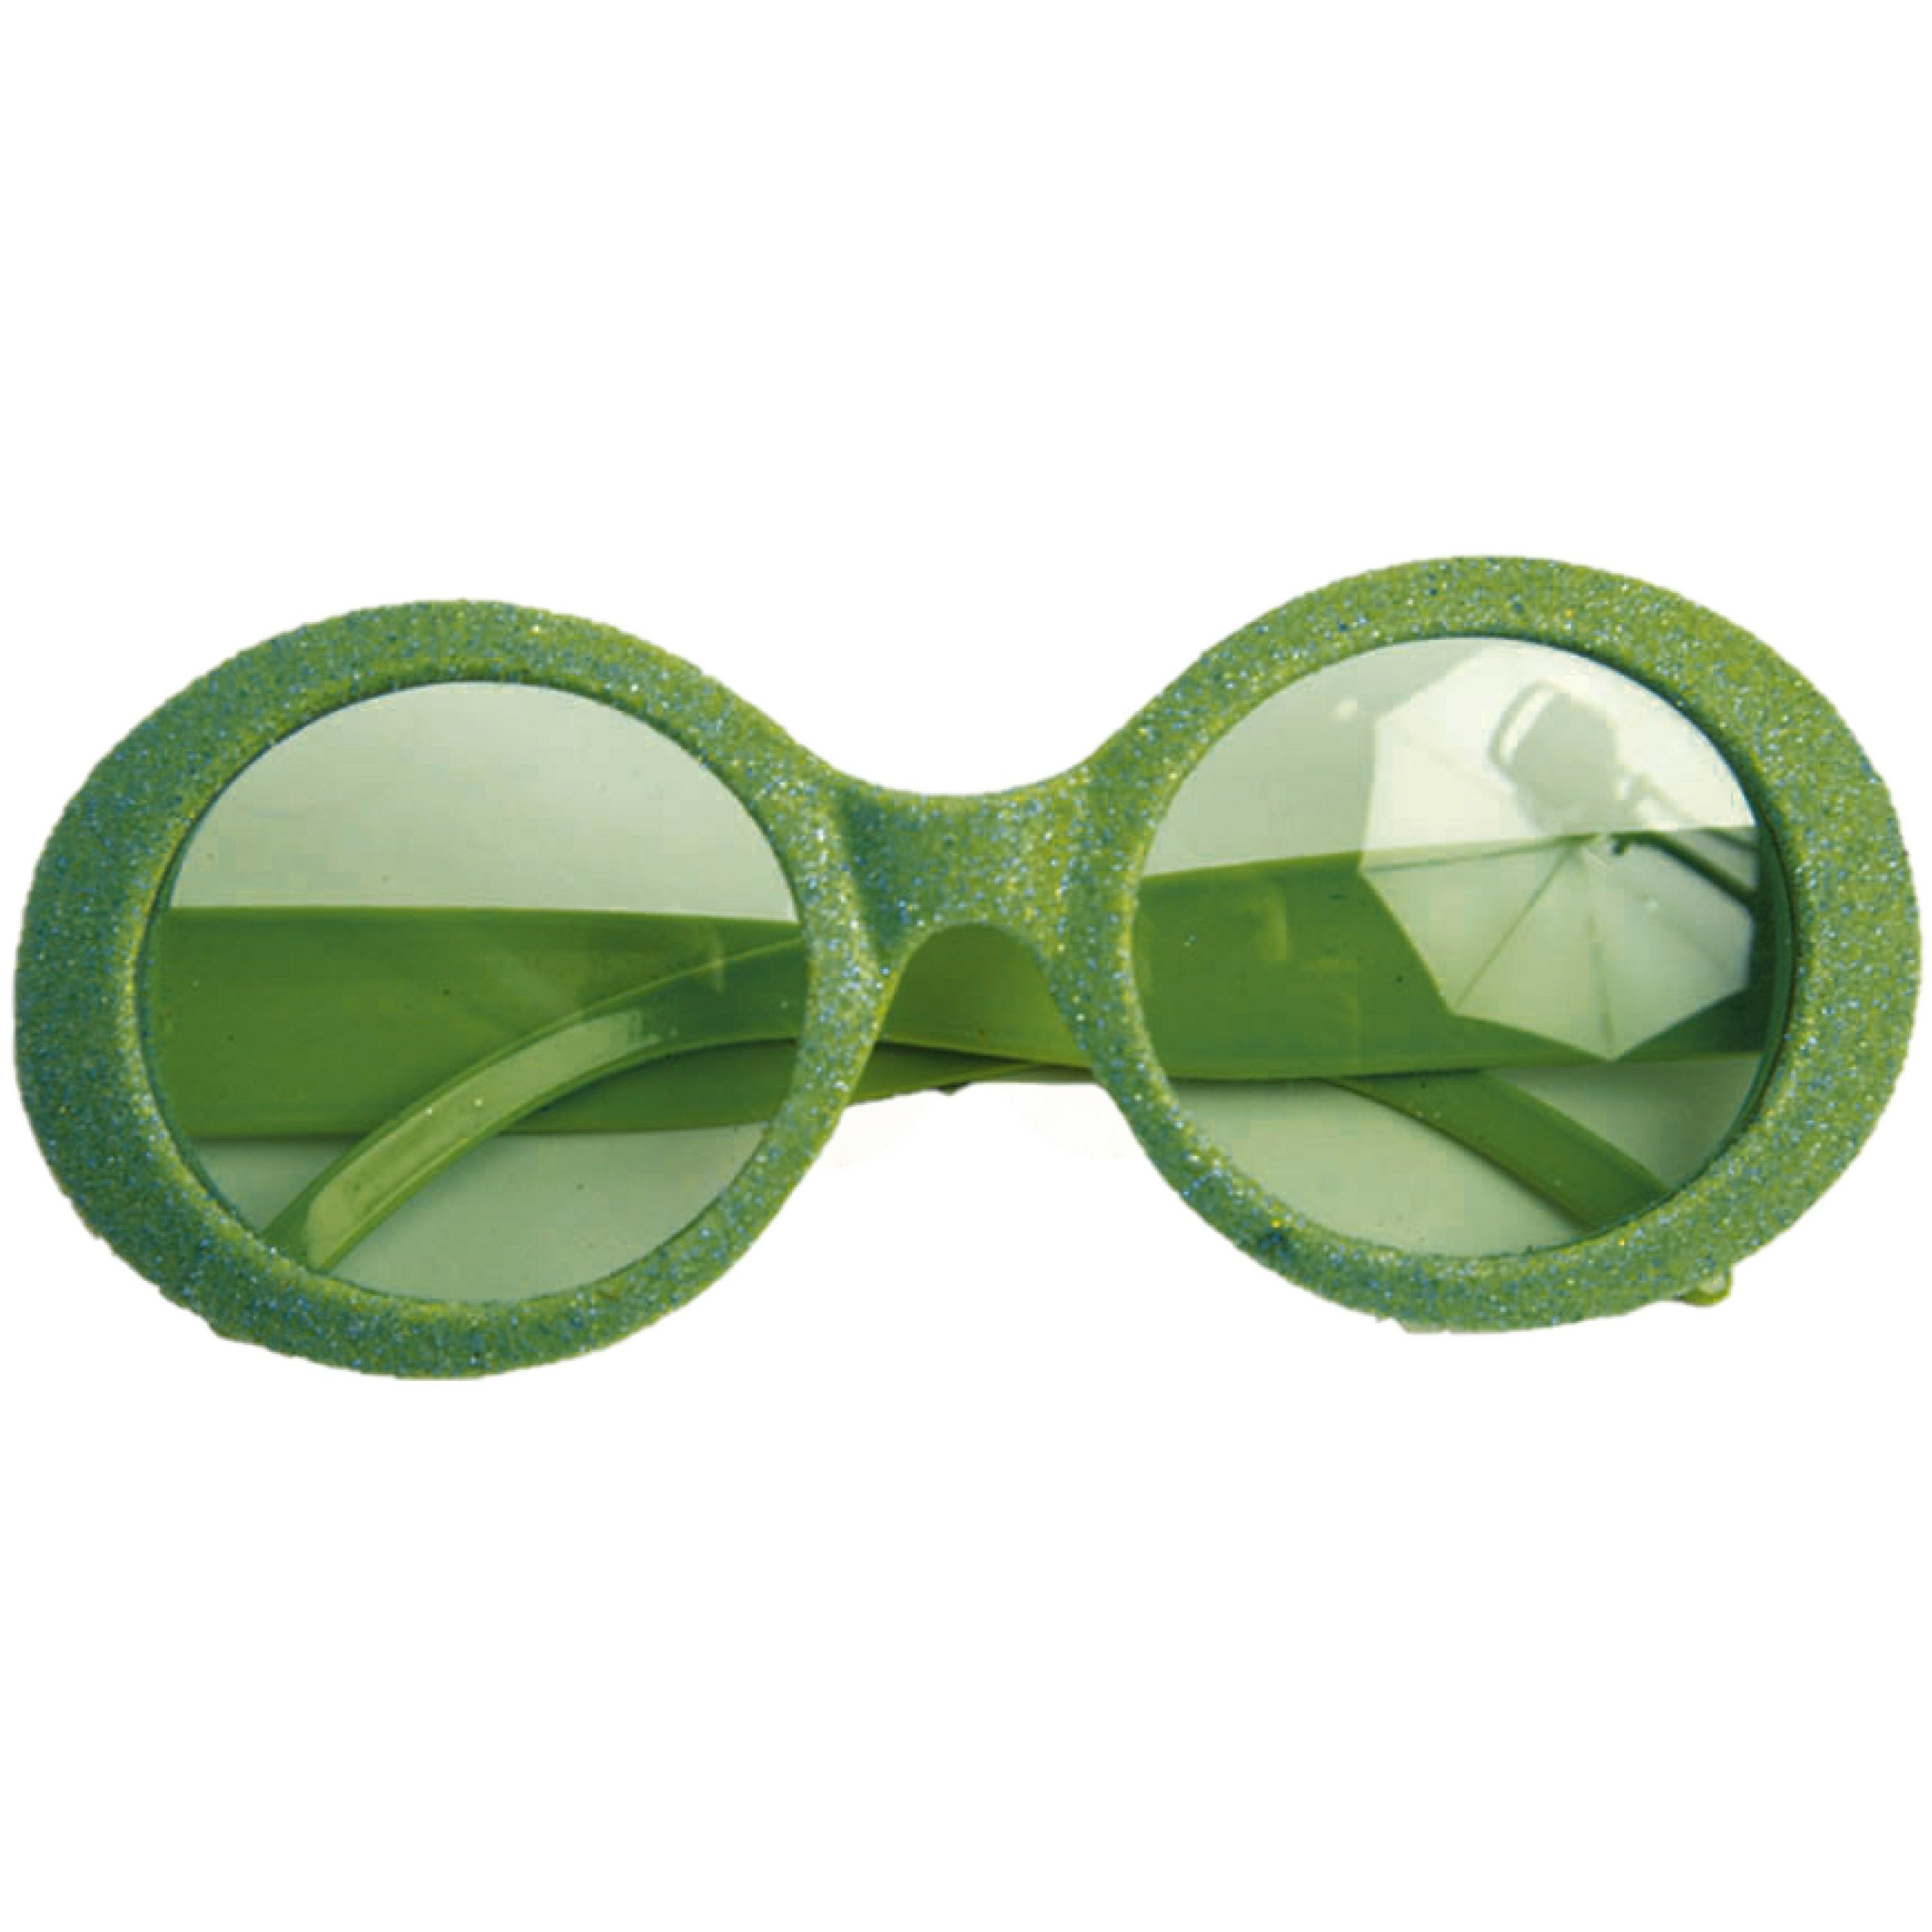 Groene disco dames party bril met glitters